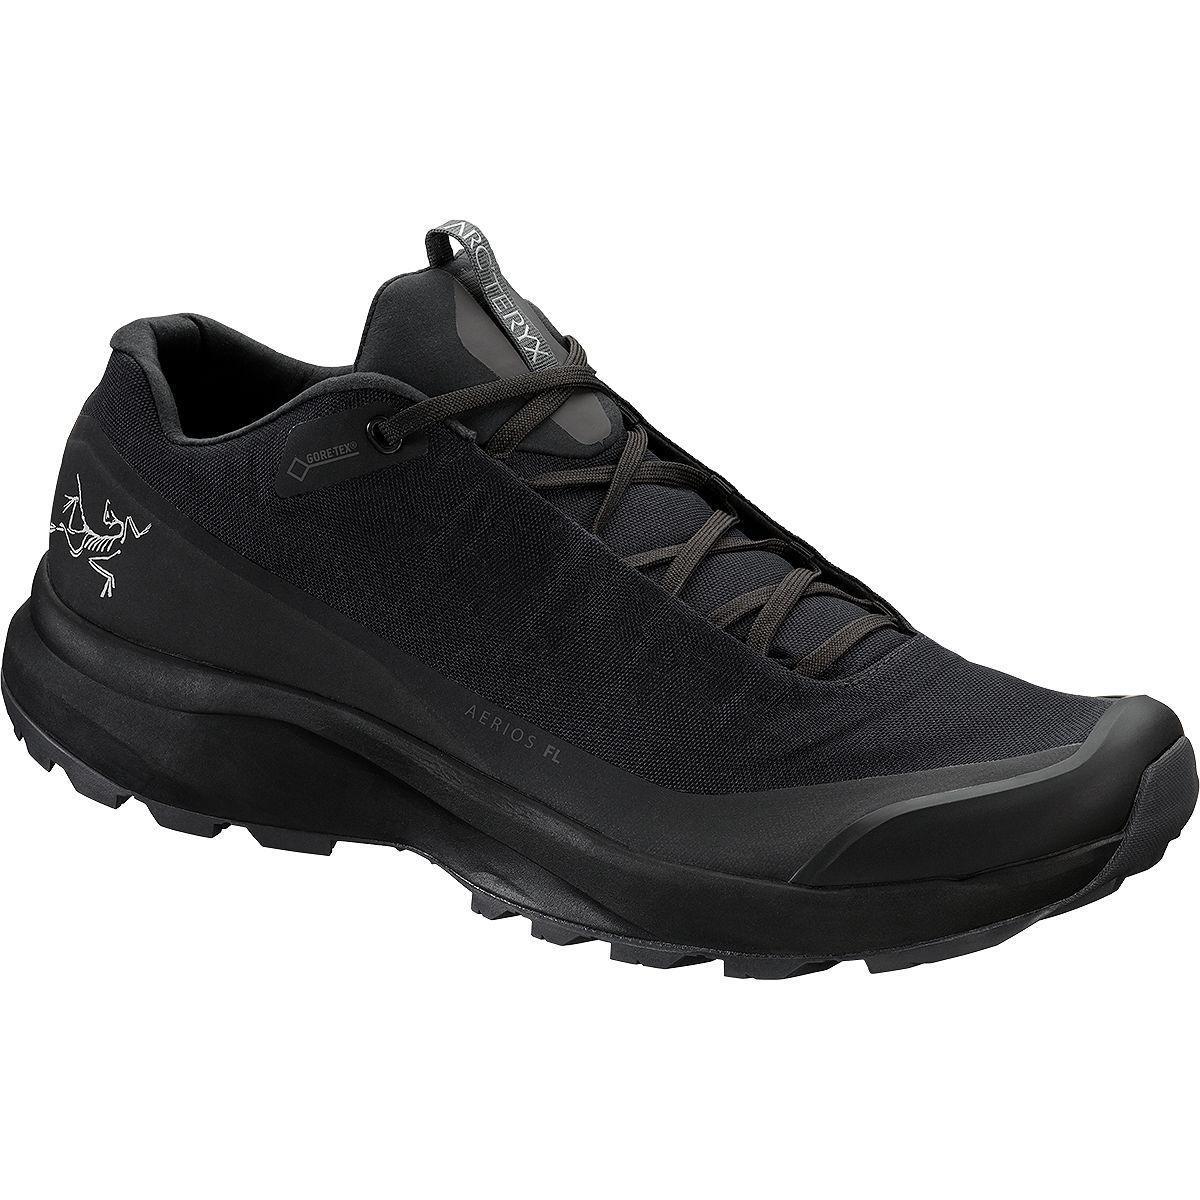 Arc'teryx Lace Aerios Fl Gtx Hiking Shoe in Black for Men - Lyst